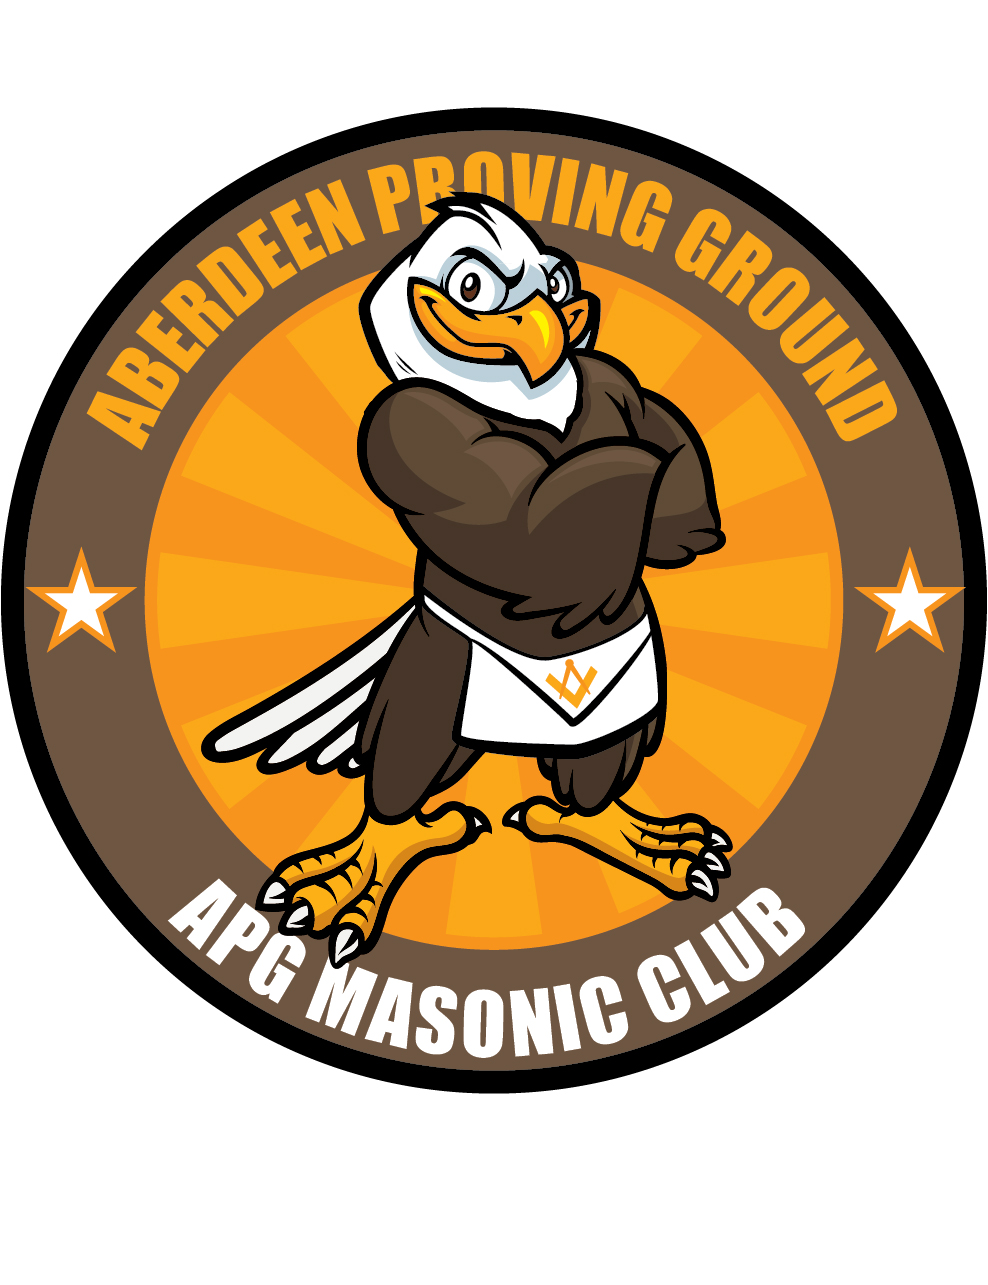 Aberdeen Proving Grounds Masonic Club